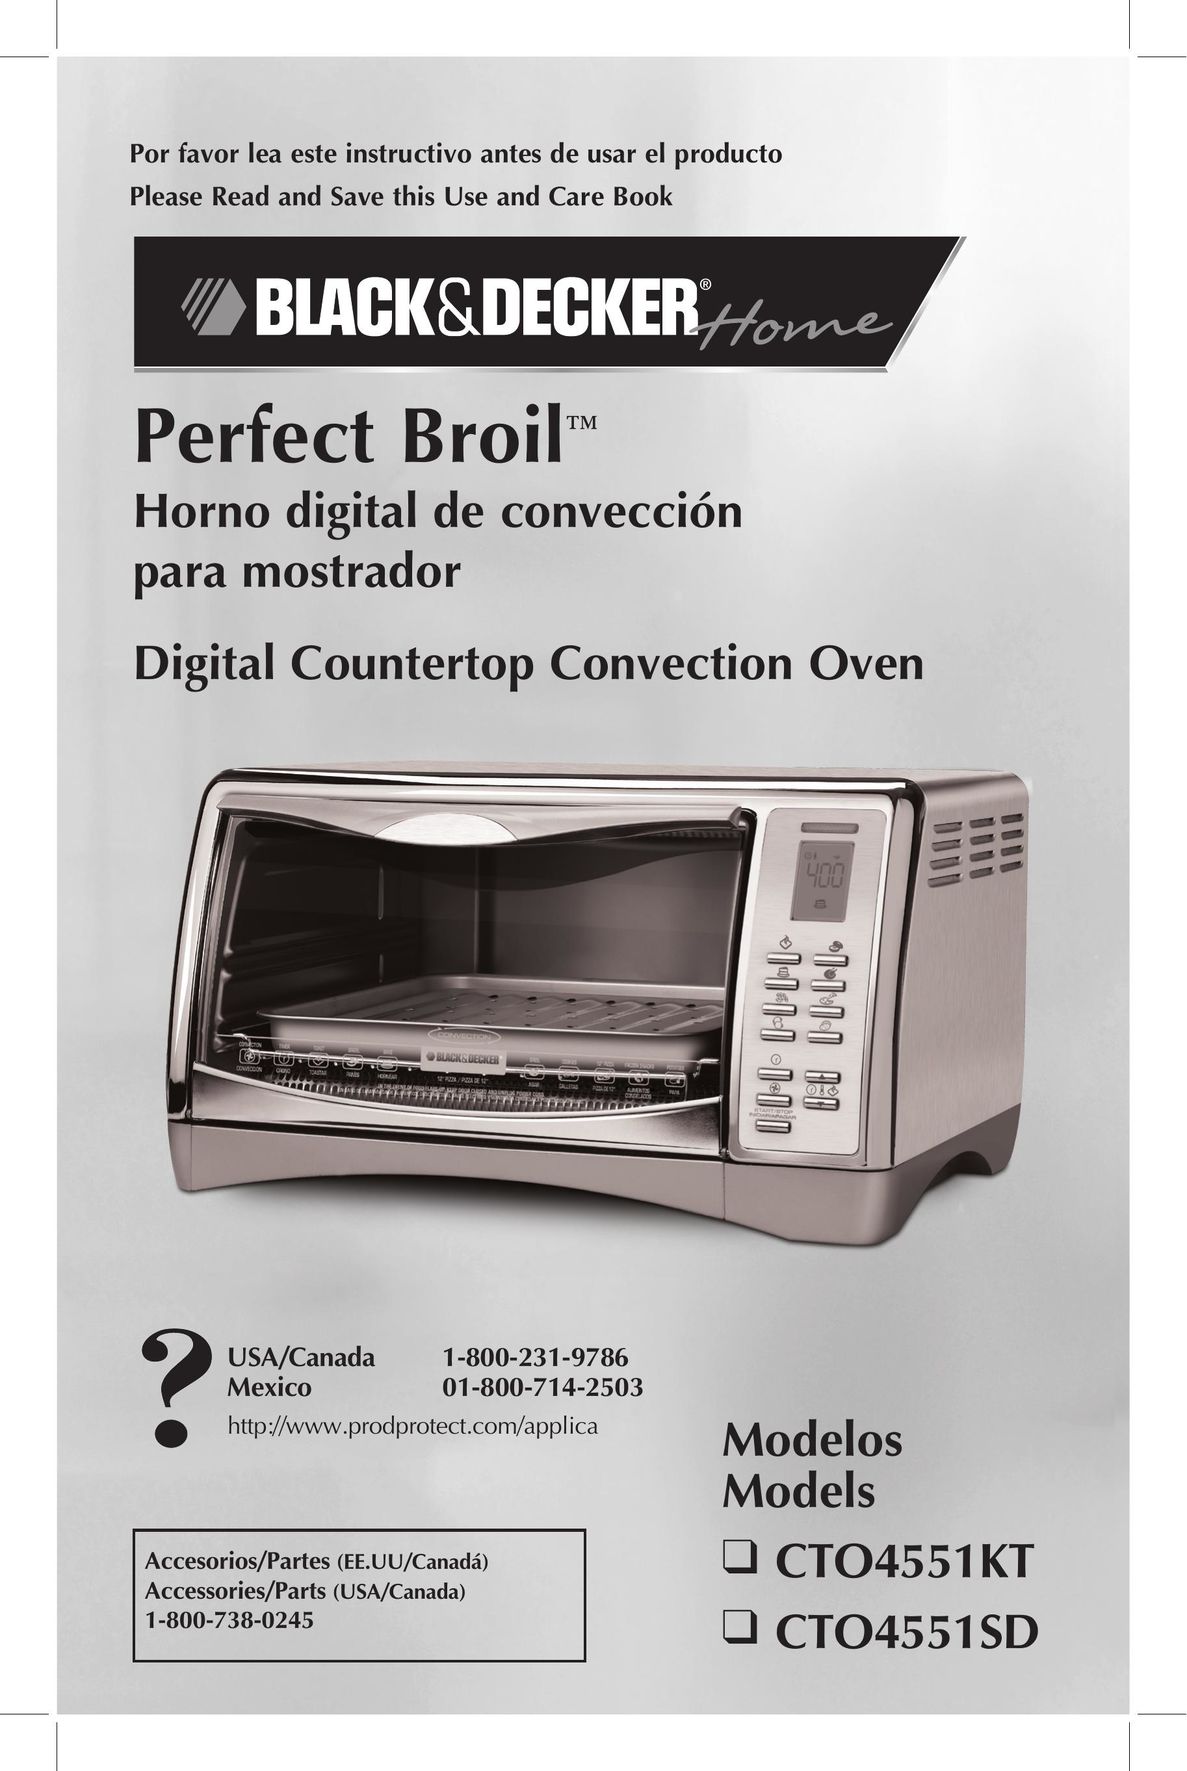 Black & Decker CTO4551KT Convection Oven User Manual